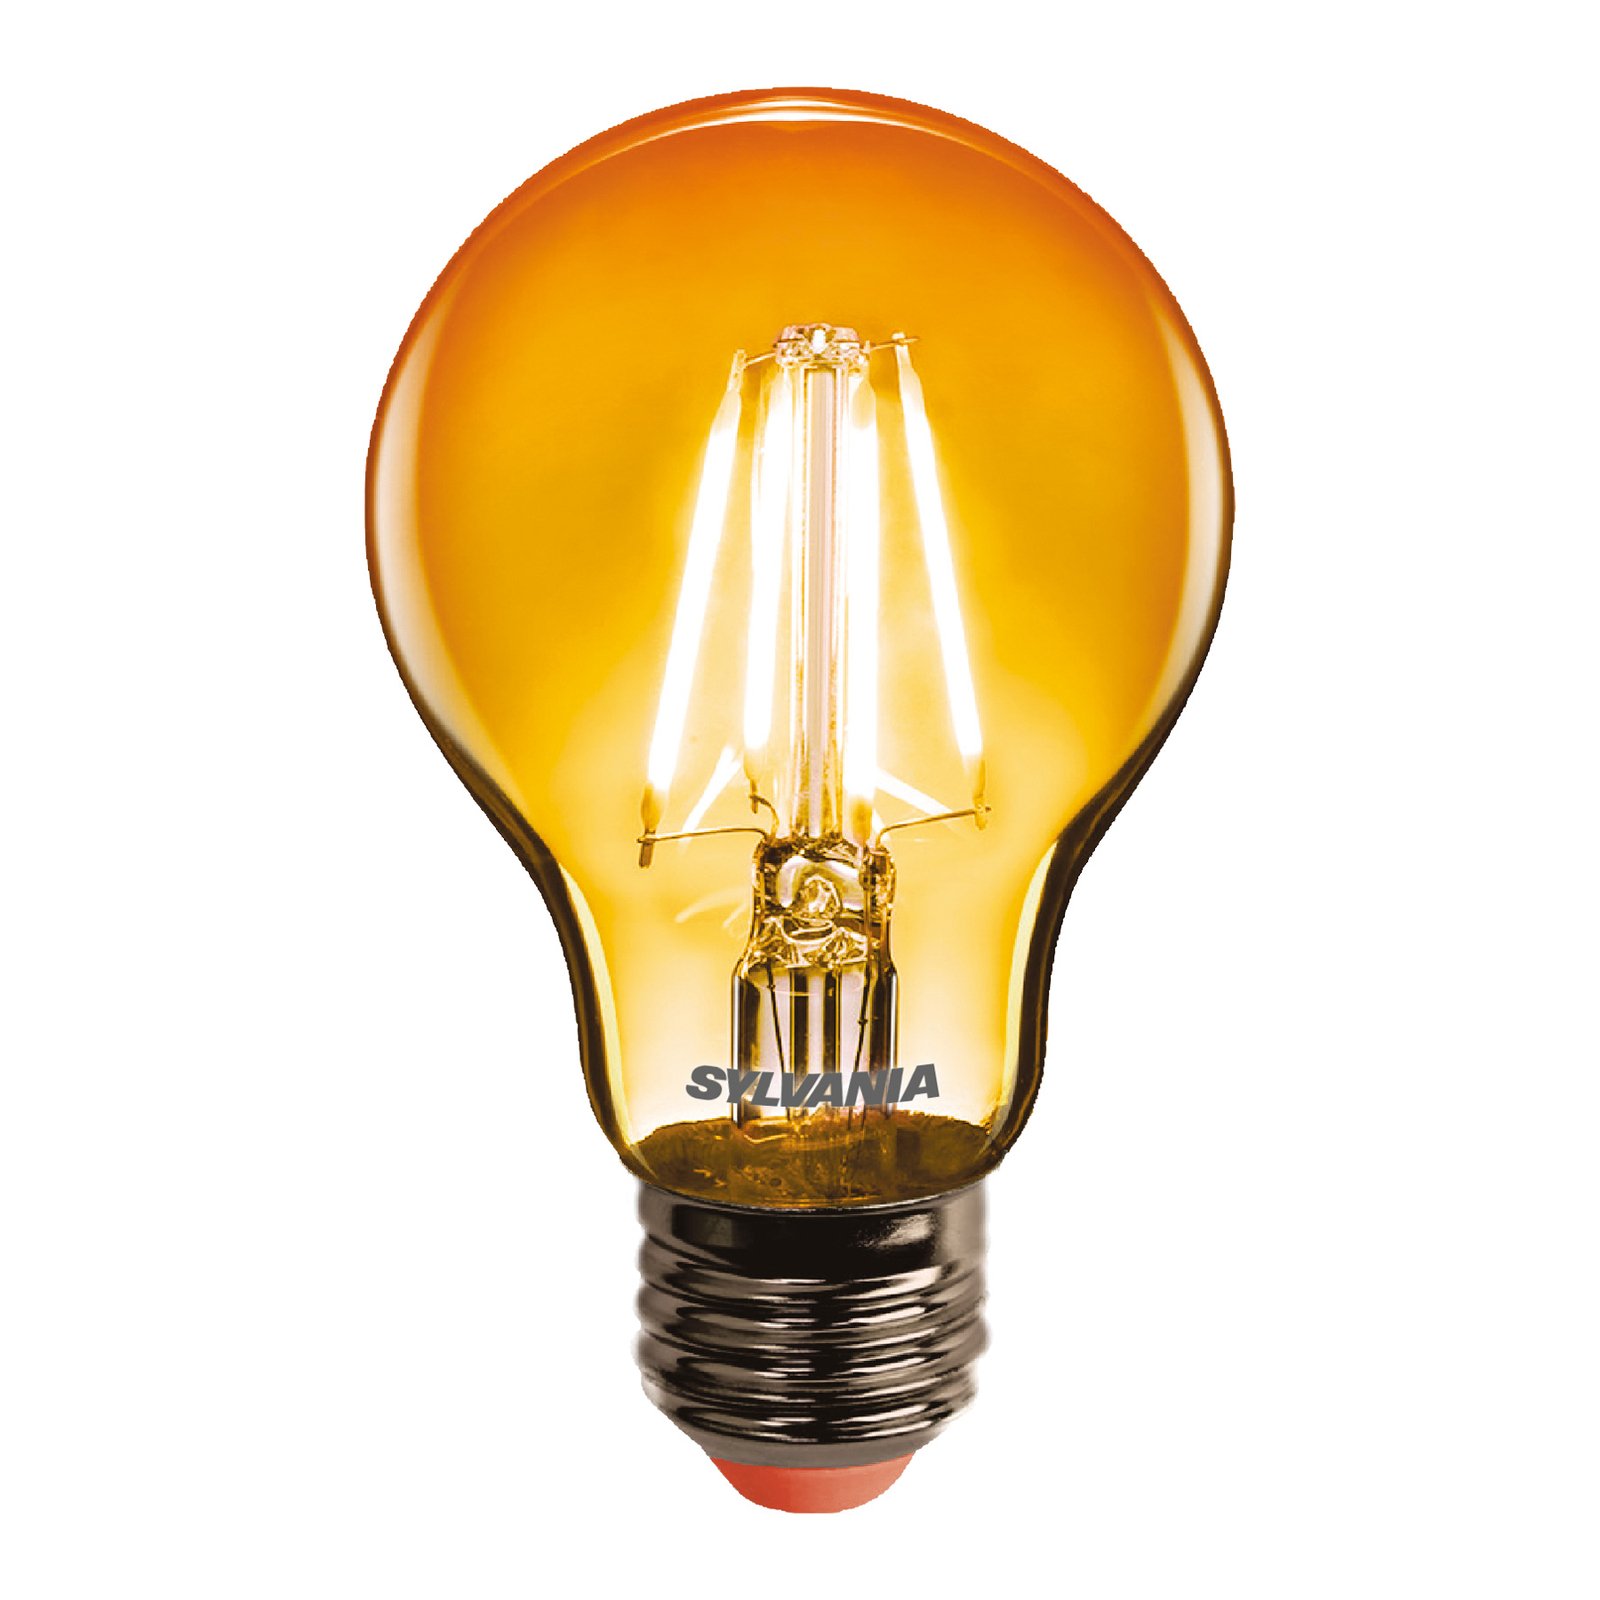 Sylvania ToLEDo rétro ampoule LED E27 4,1 W orange